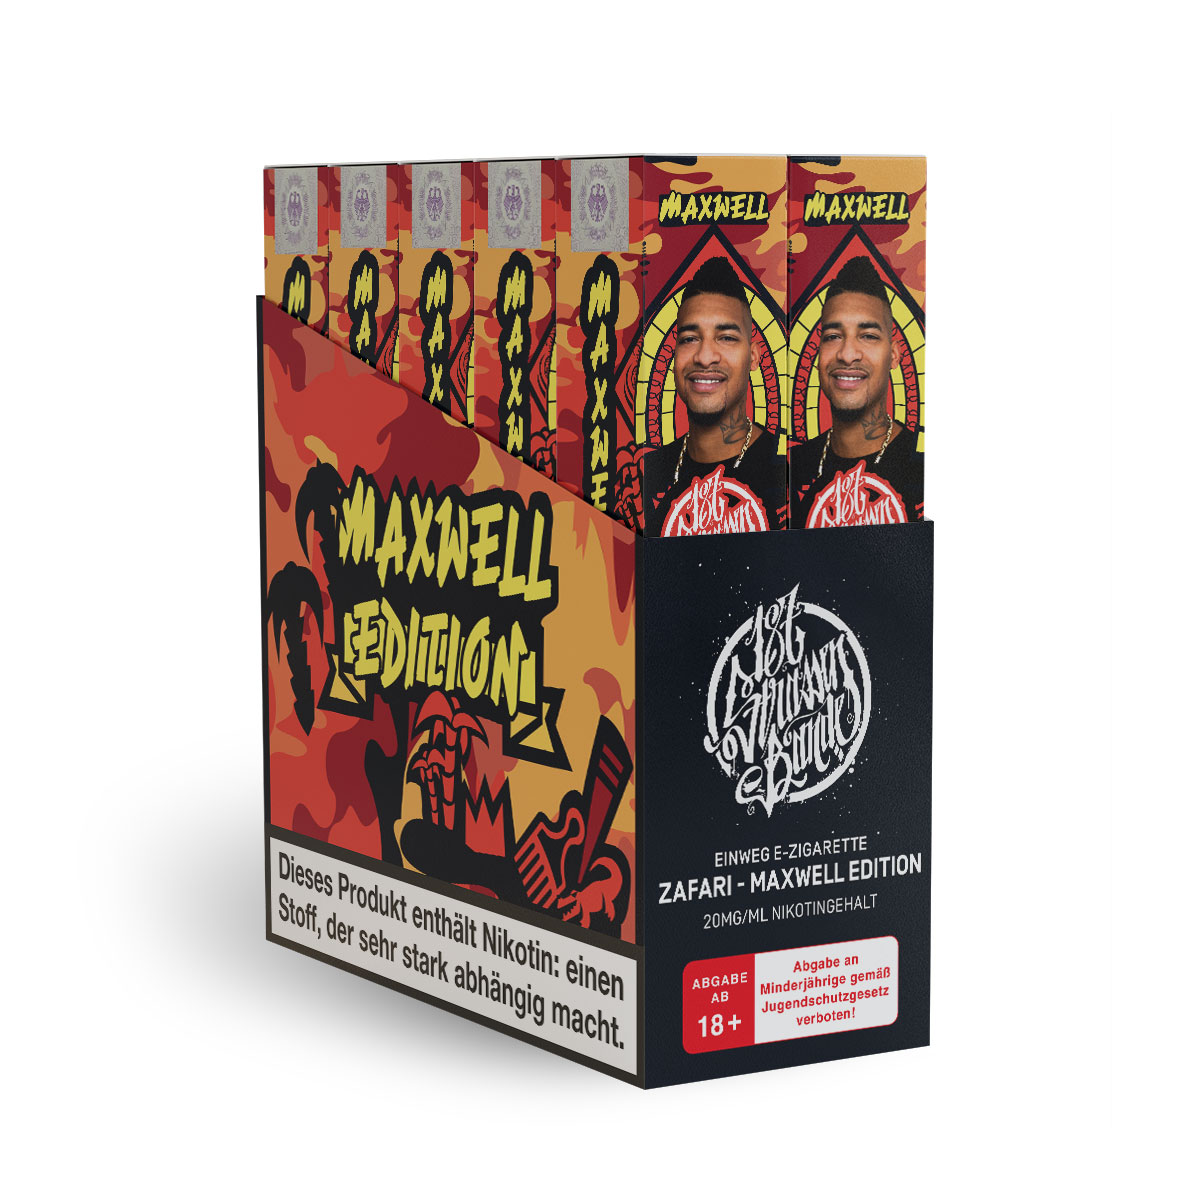 187 Sticks Zafari - Maxwell Edition 20mg/ml (Steuerware)